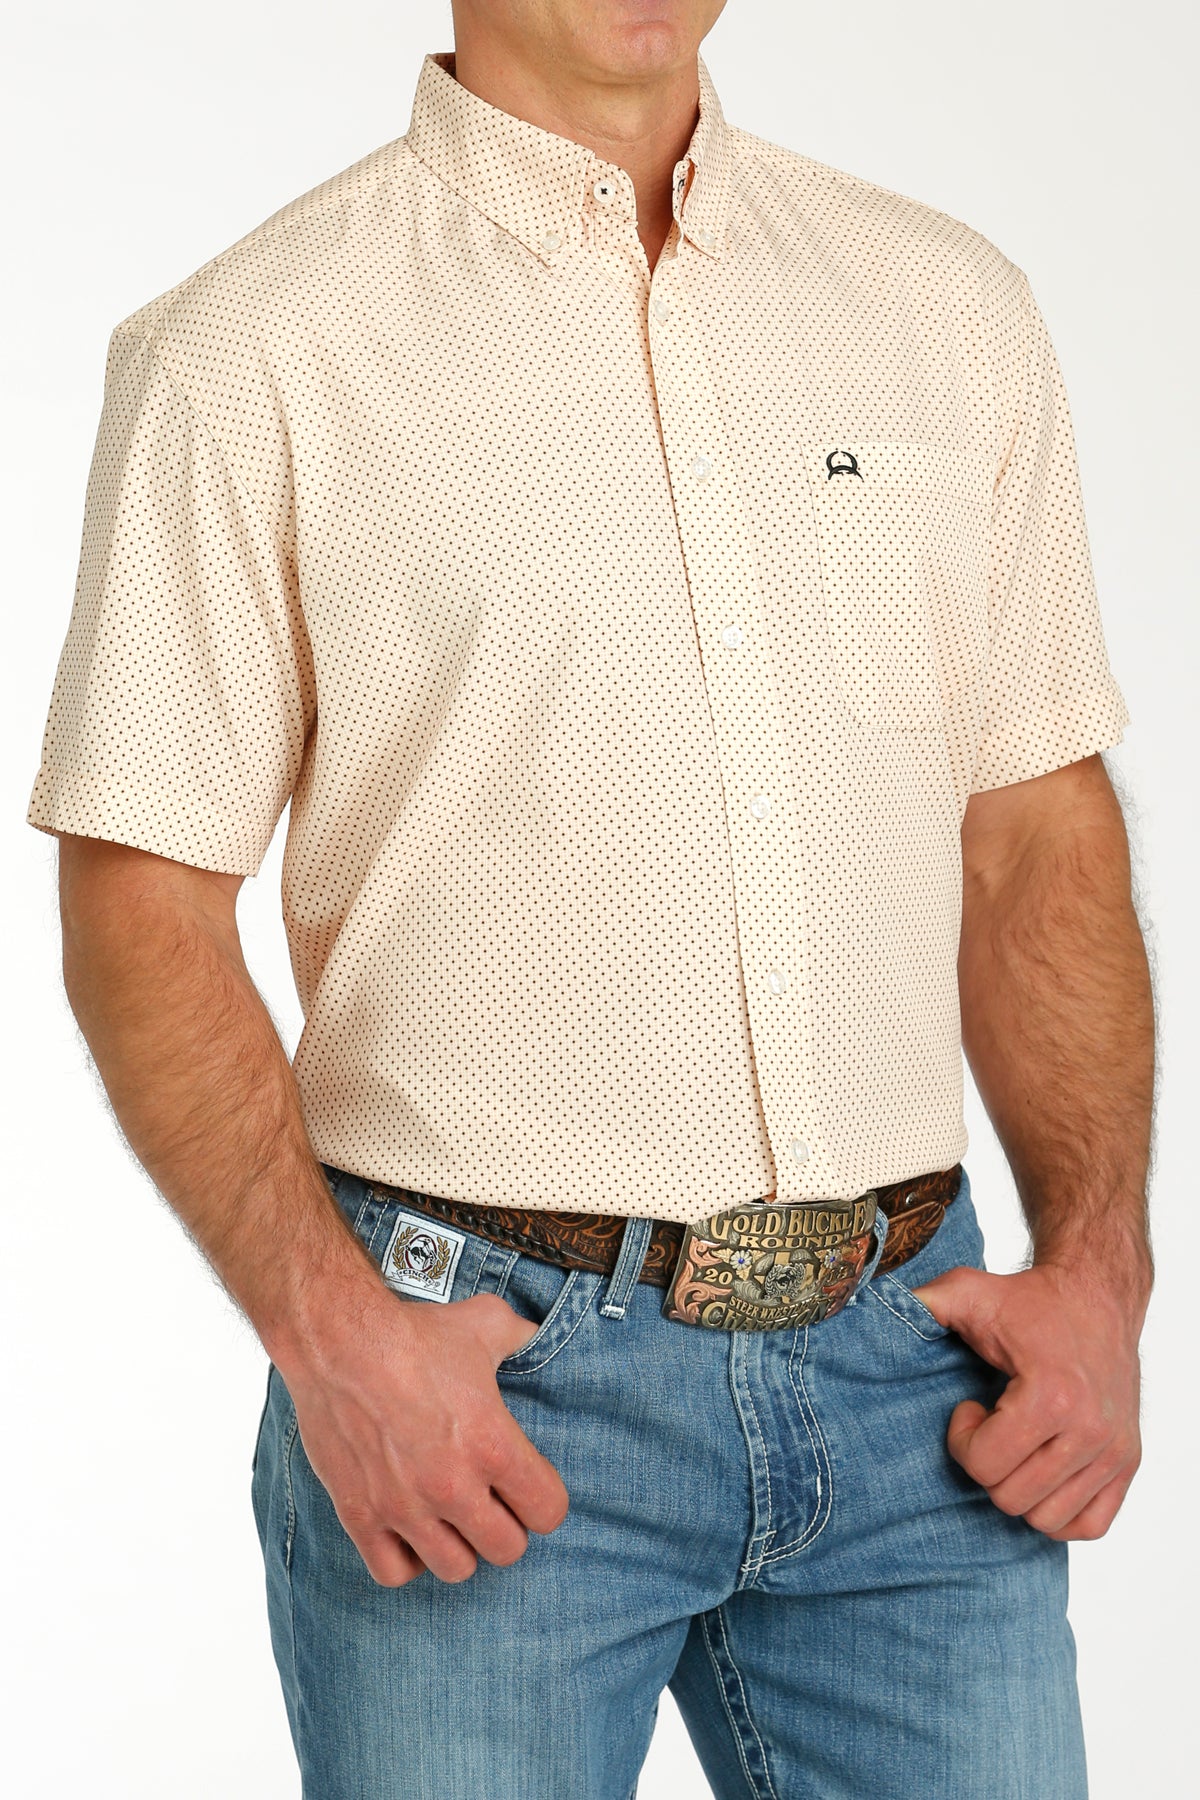 Cinch Men's S/S Arenaflex Geometric Polka Dot Western Button Down Shirt in Peach